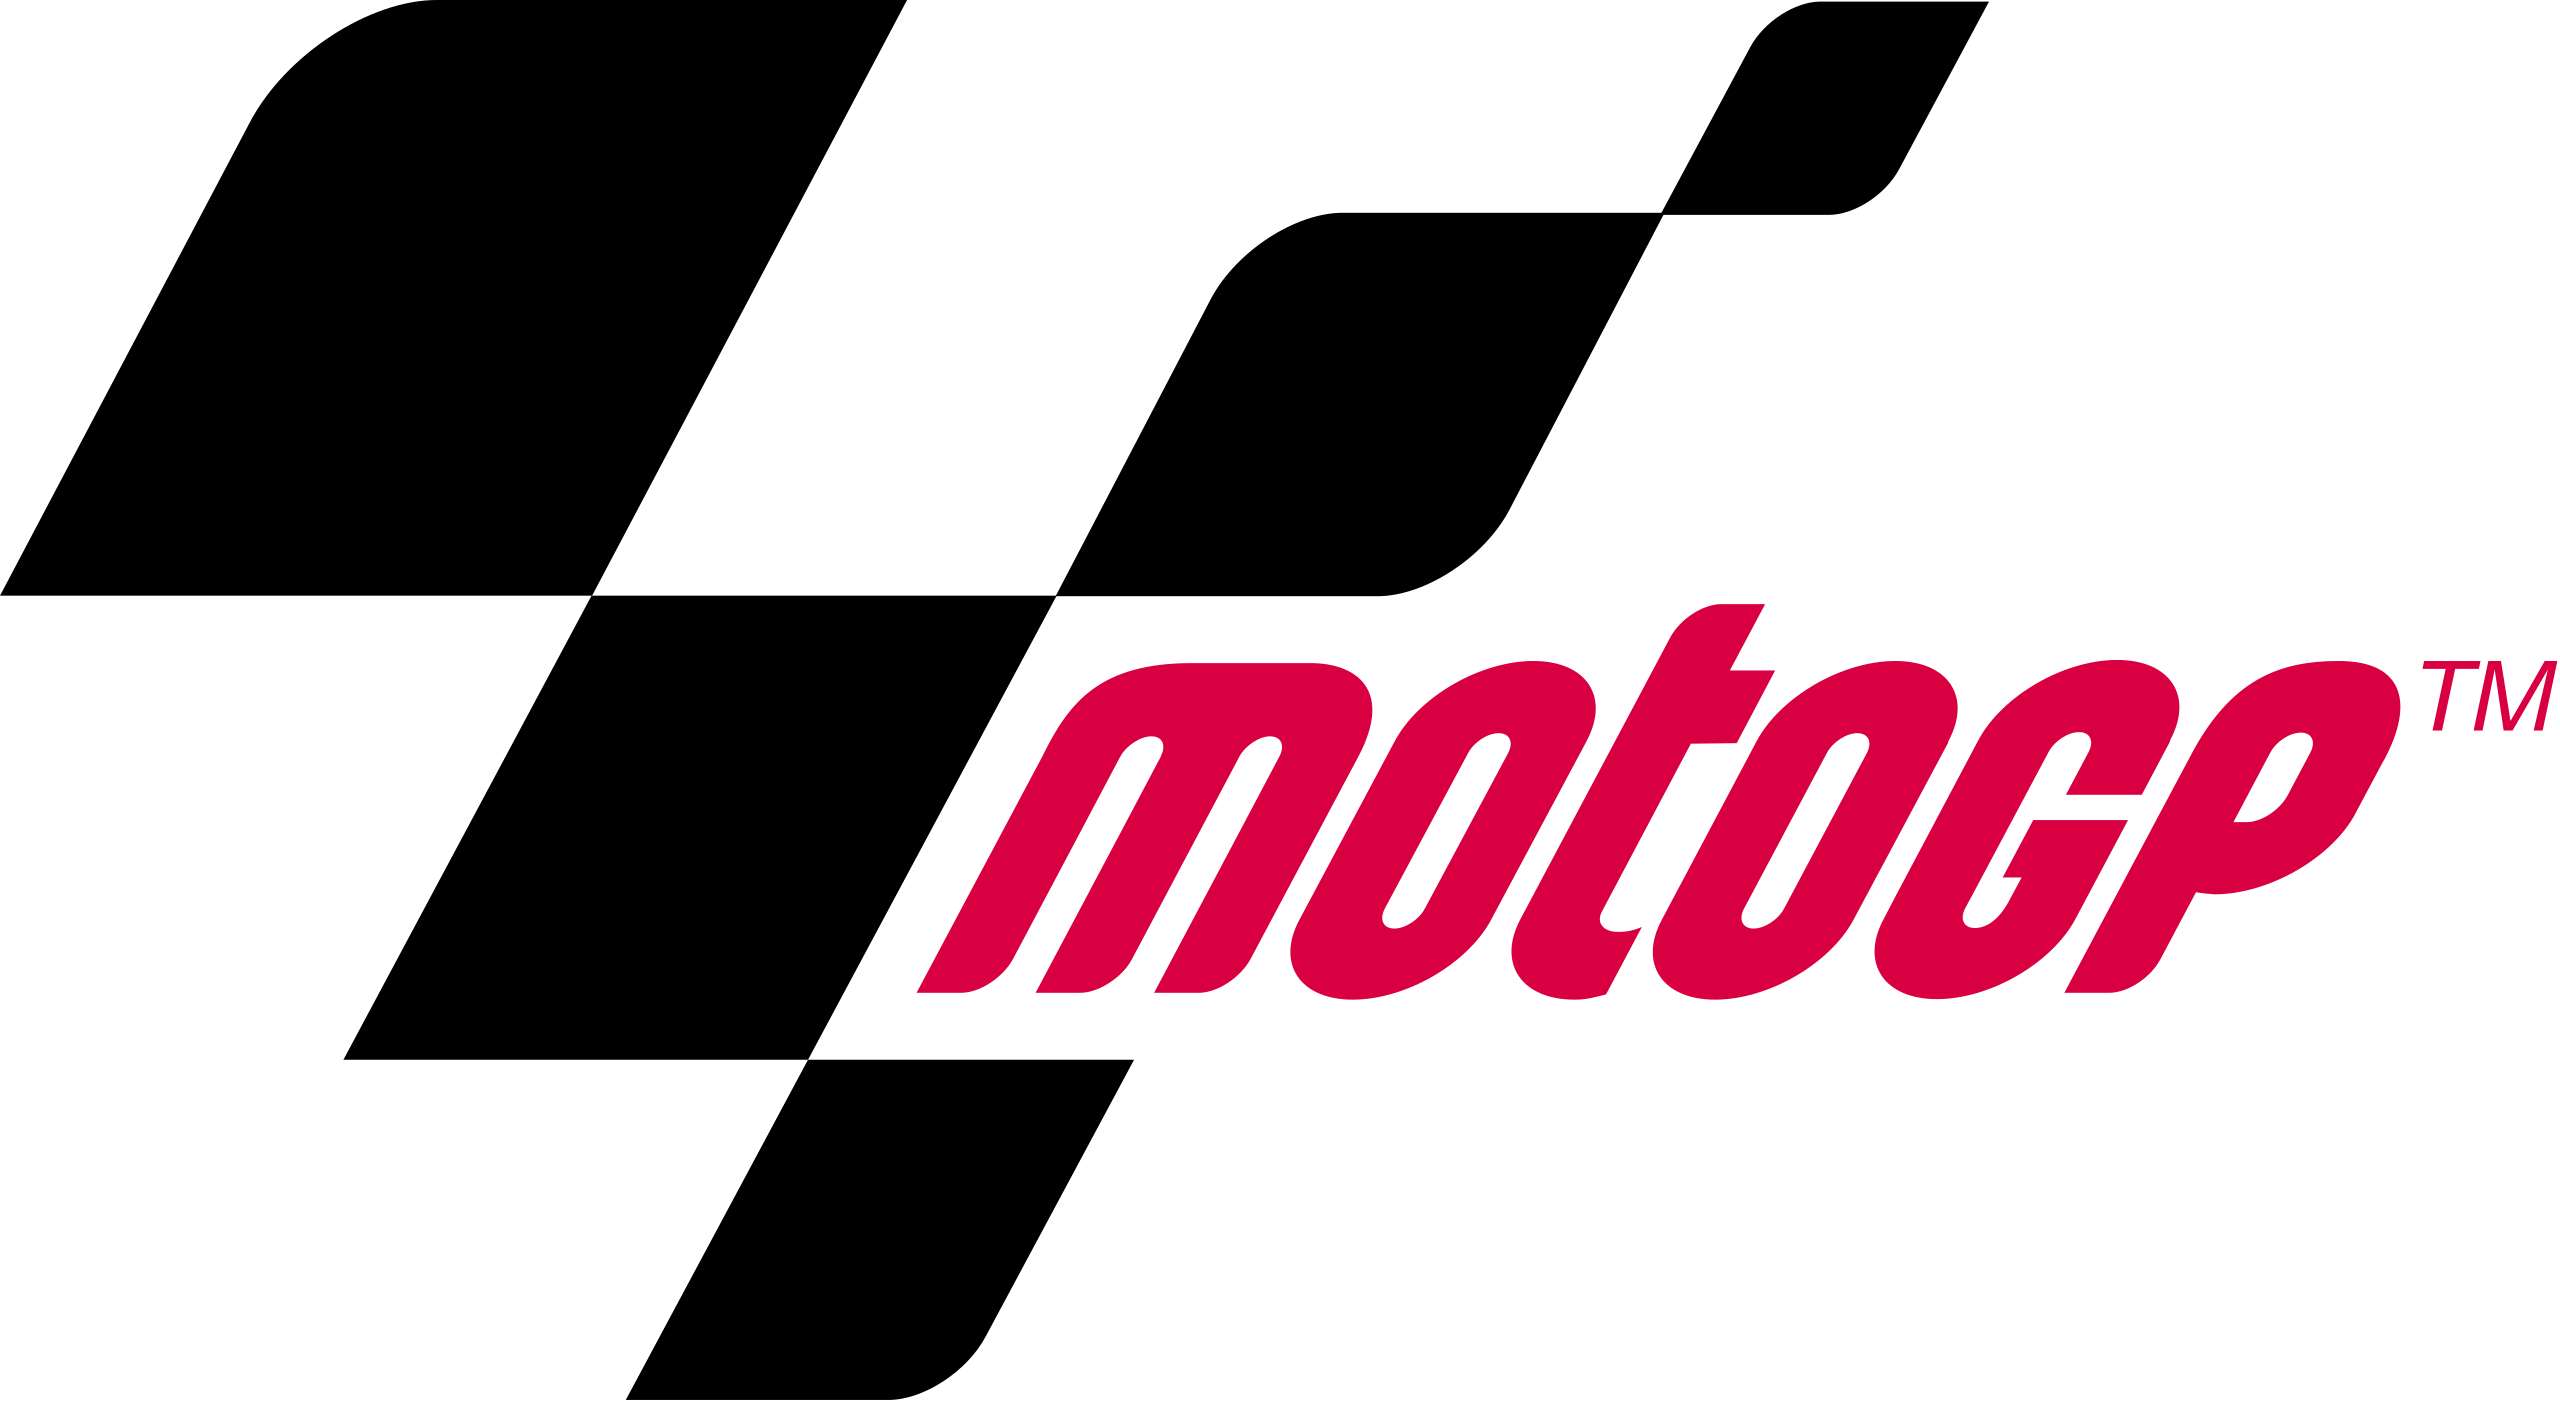 MotoGP Live Stream & Replay